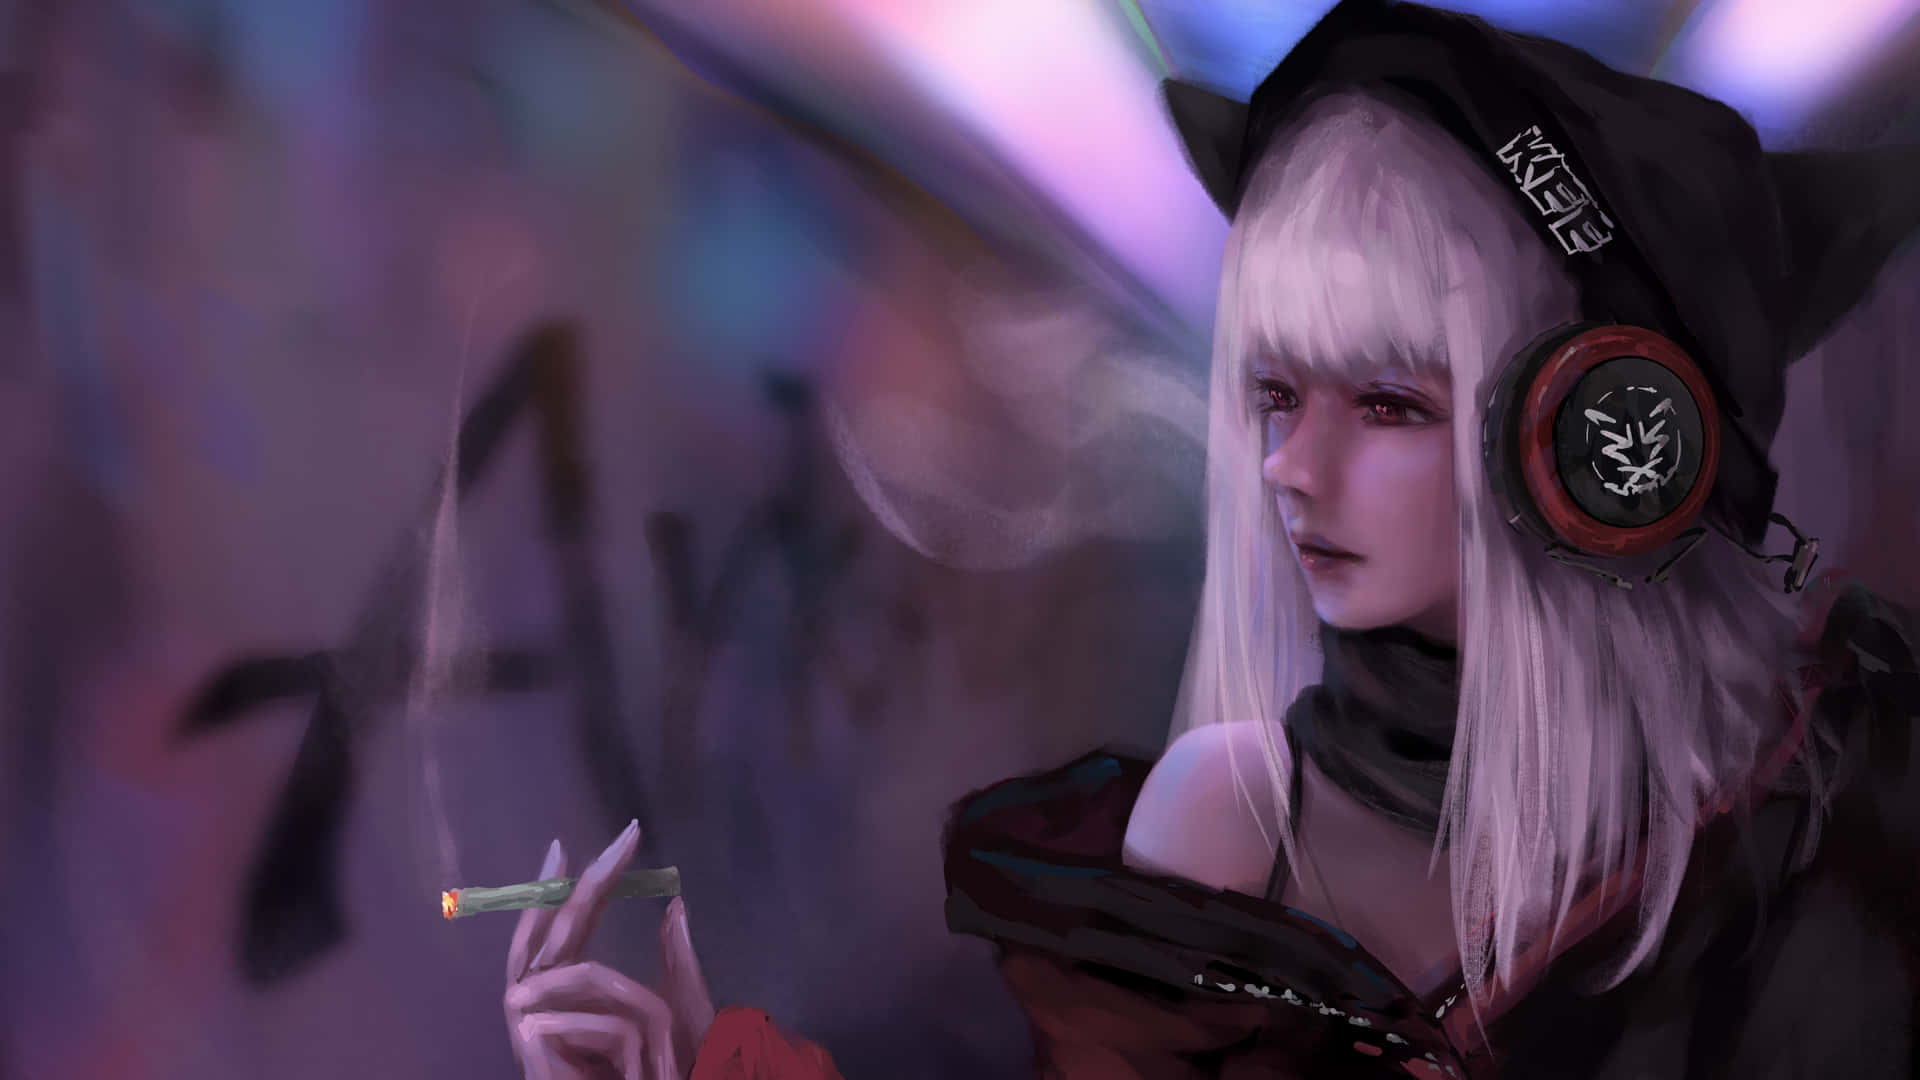 Digital Painting Of An Anime Girl Smoking